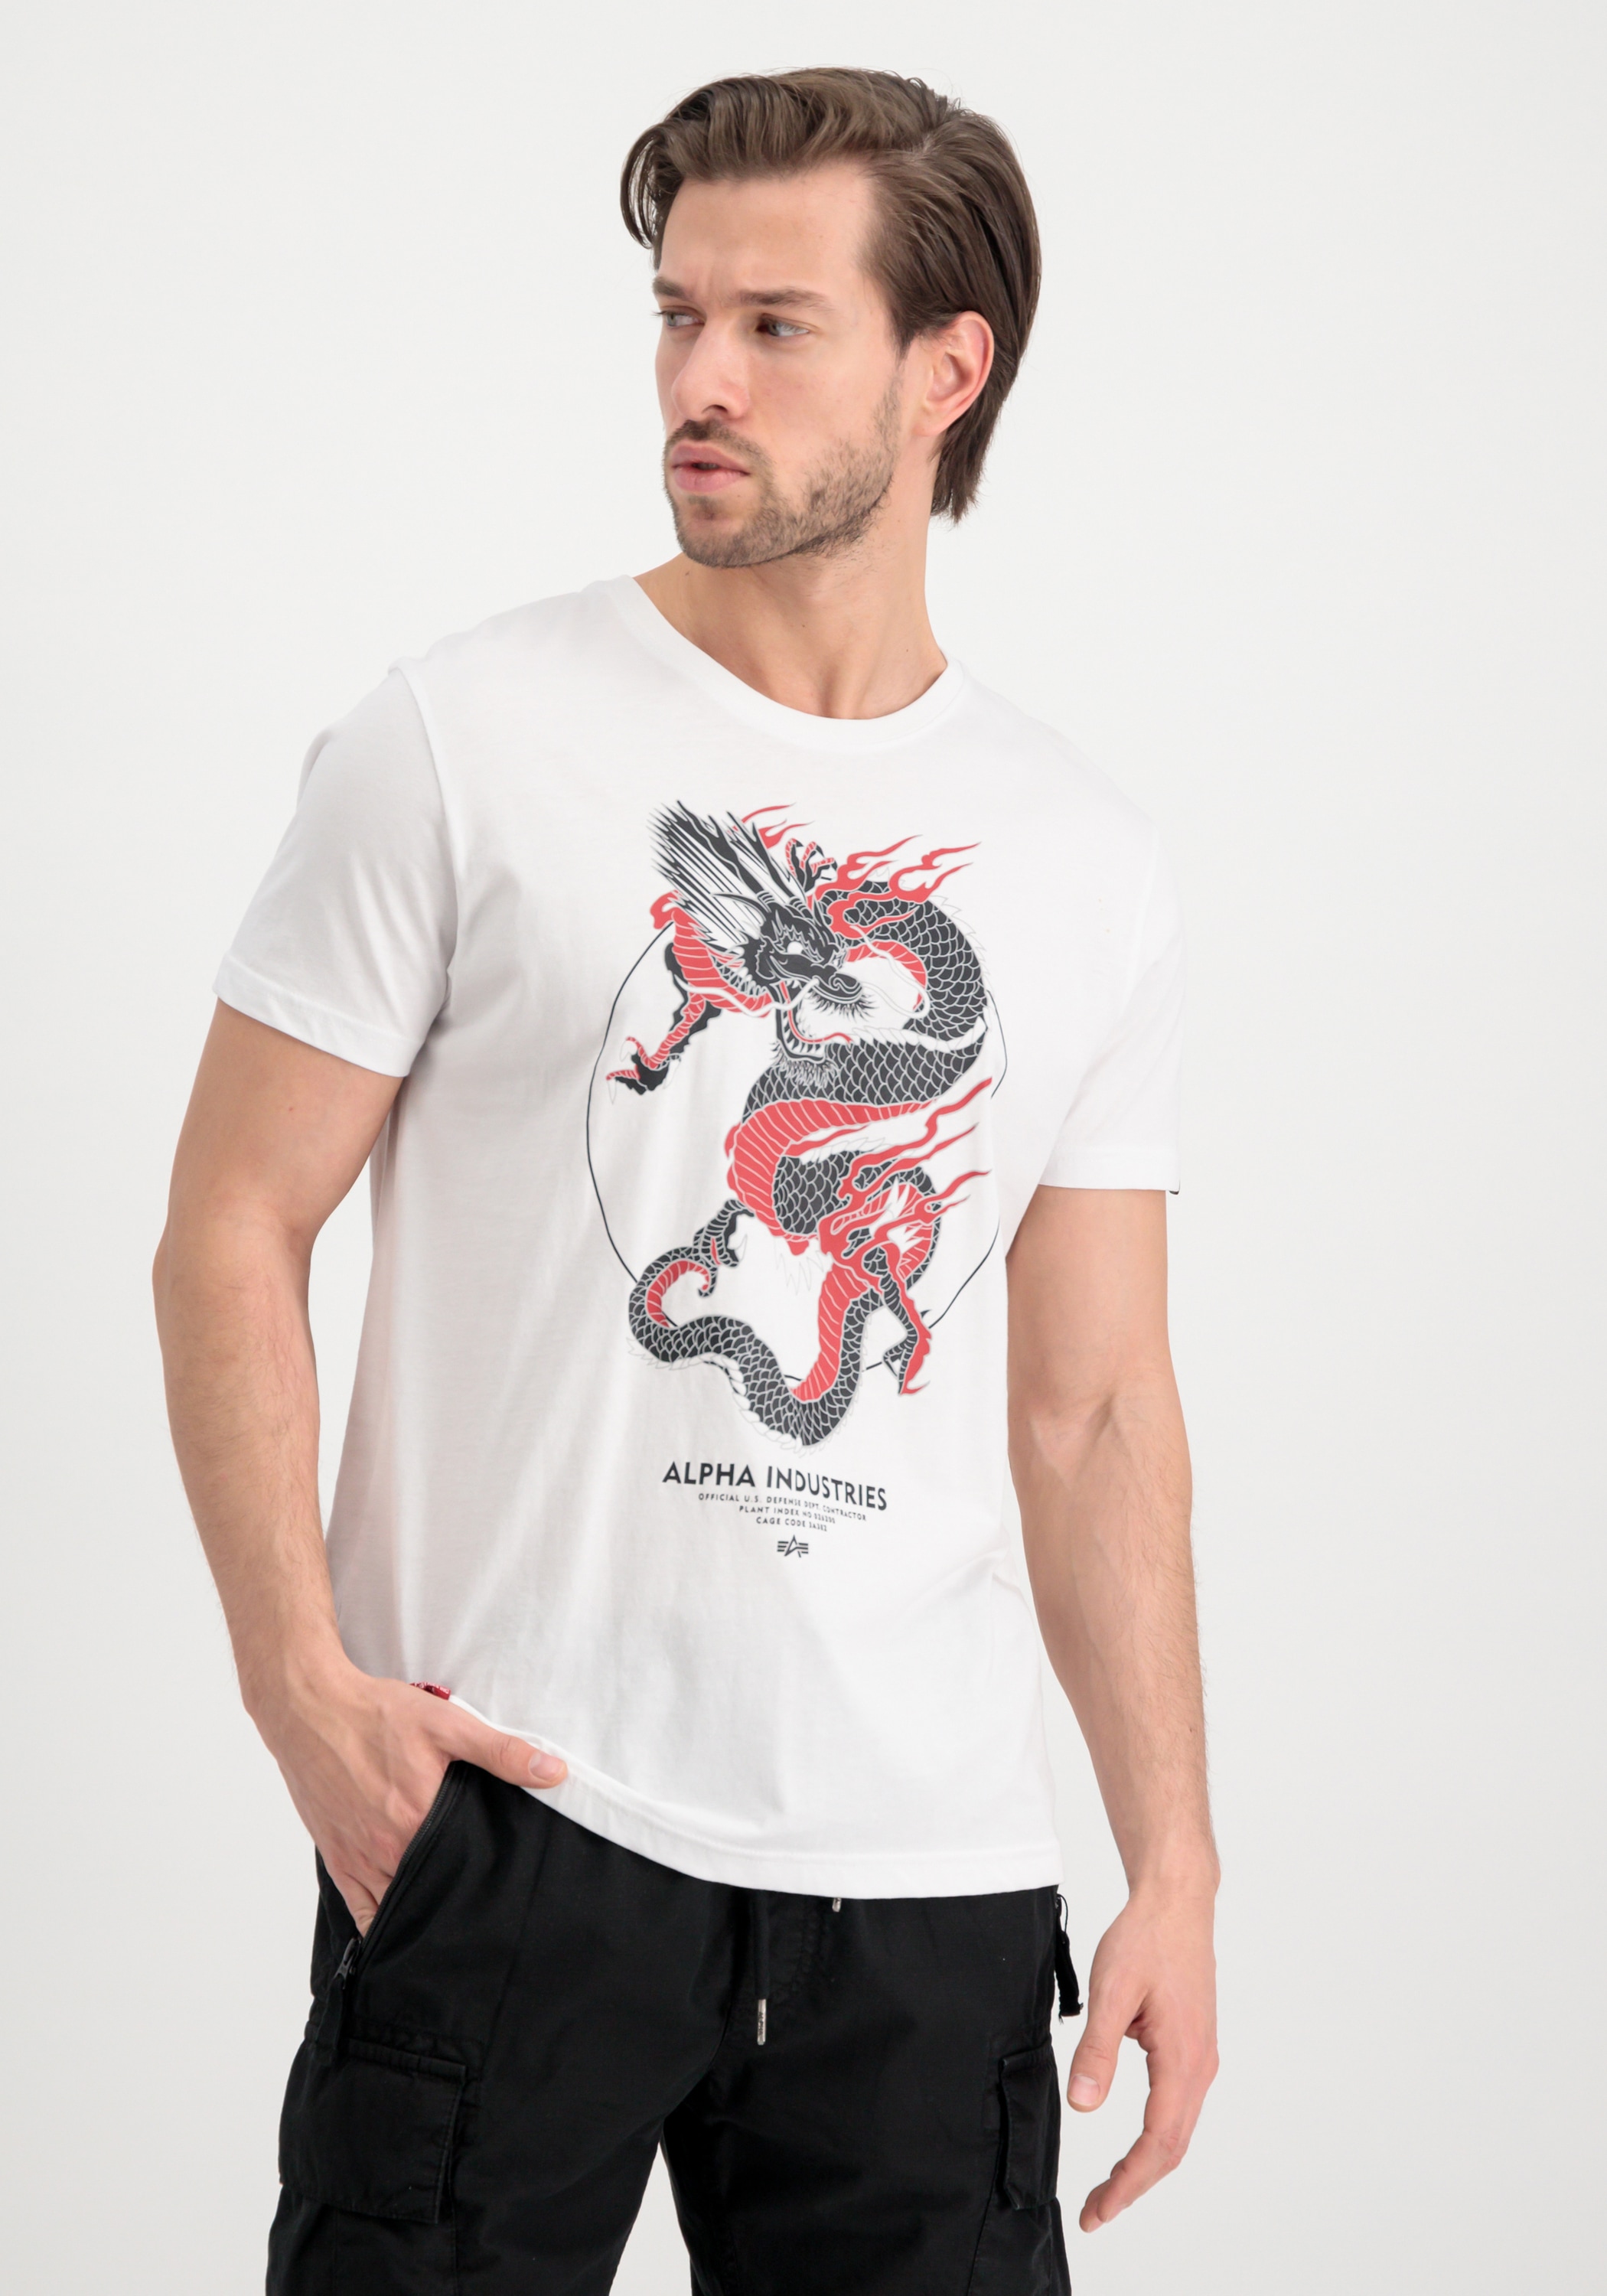 bestellen T-Shirts T« OTTO T-Shirt - Dragon online »Alpha bei Industries Men Alpha Industries Heritage